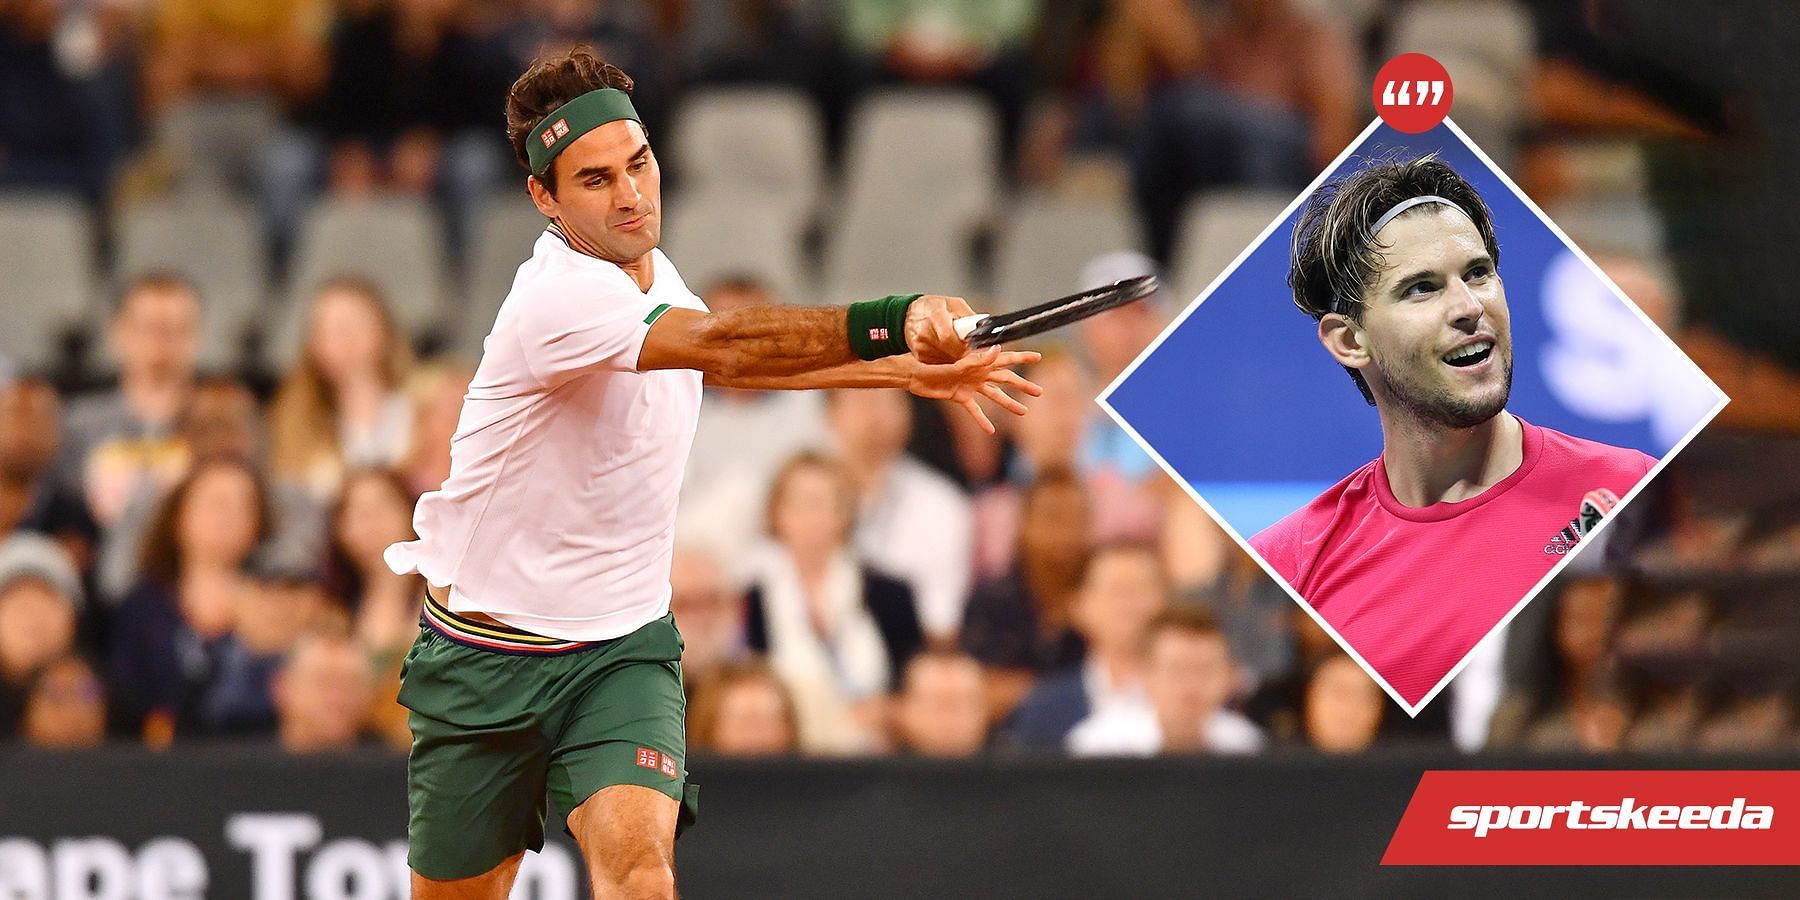 Dominic Thiem beat Roger Federer in the semifinals of the 2016 Stuttgart Open